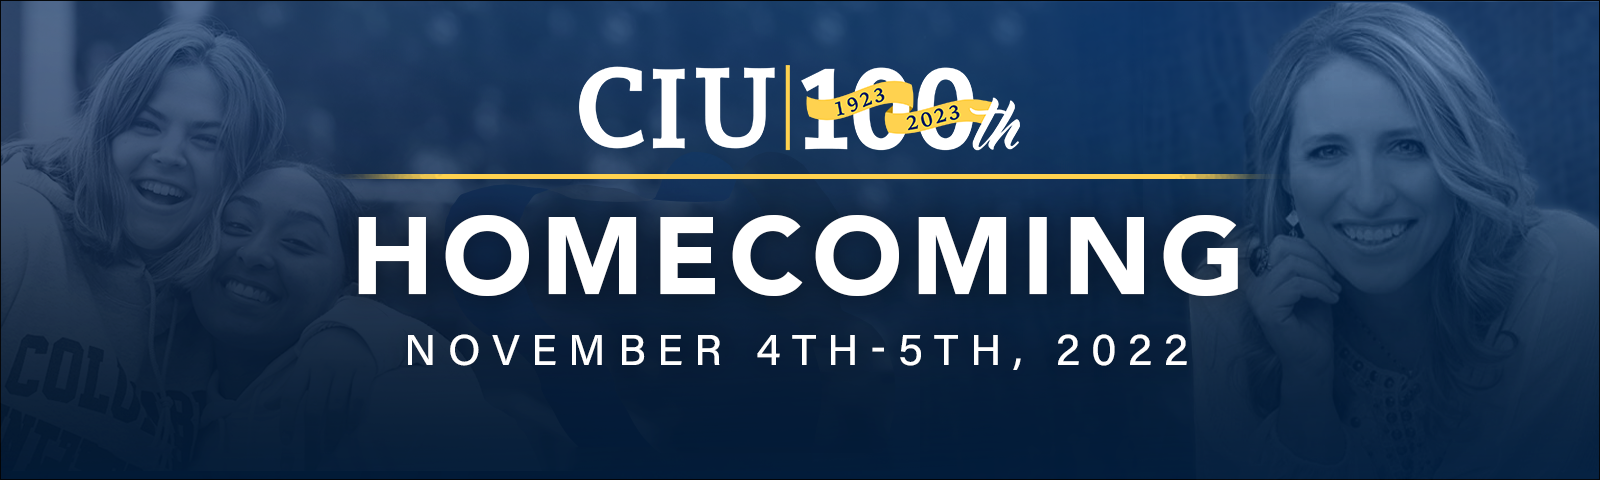 2022 Homecoming & CIU 100th Anniversary Celebration Nov 2-4, 2022